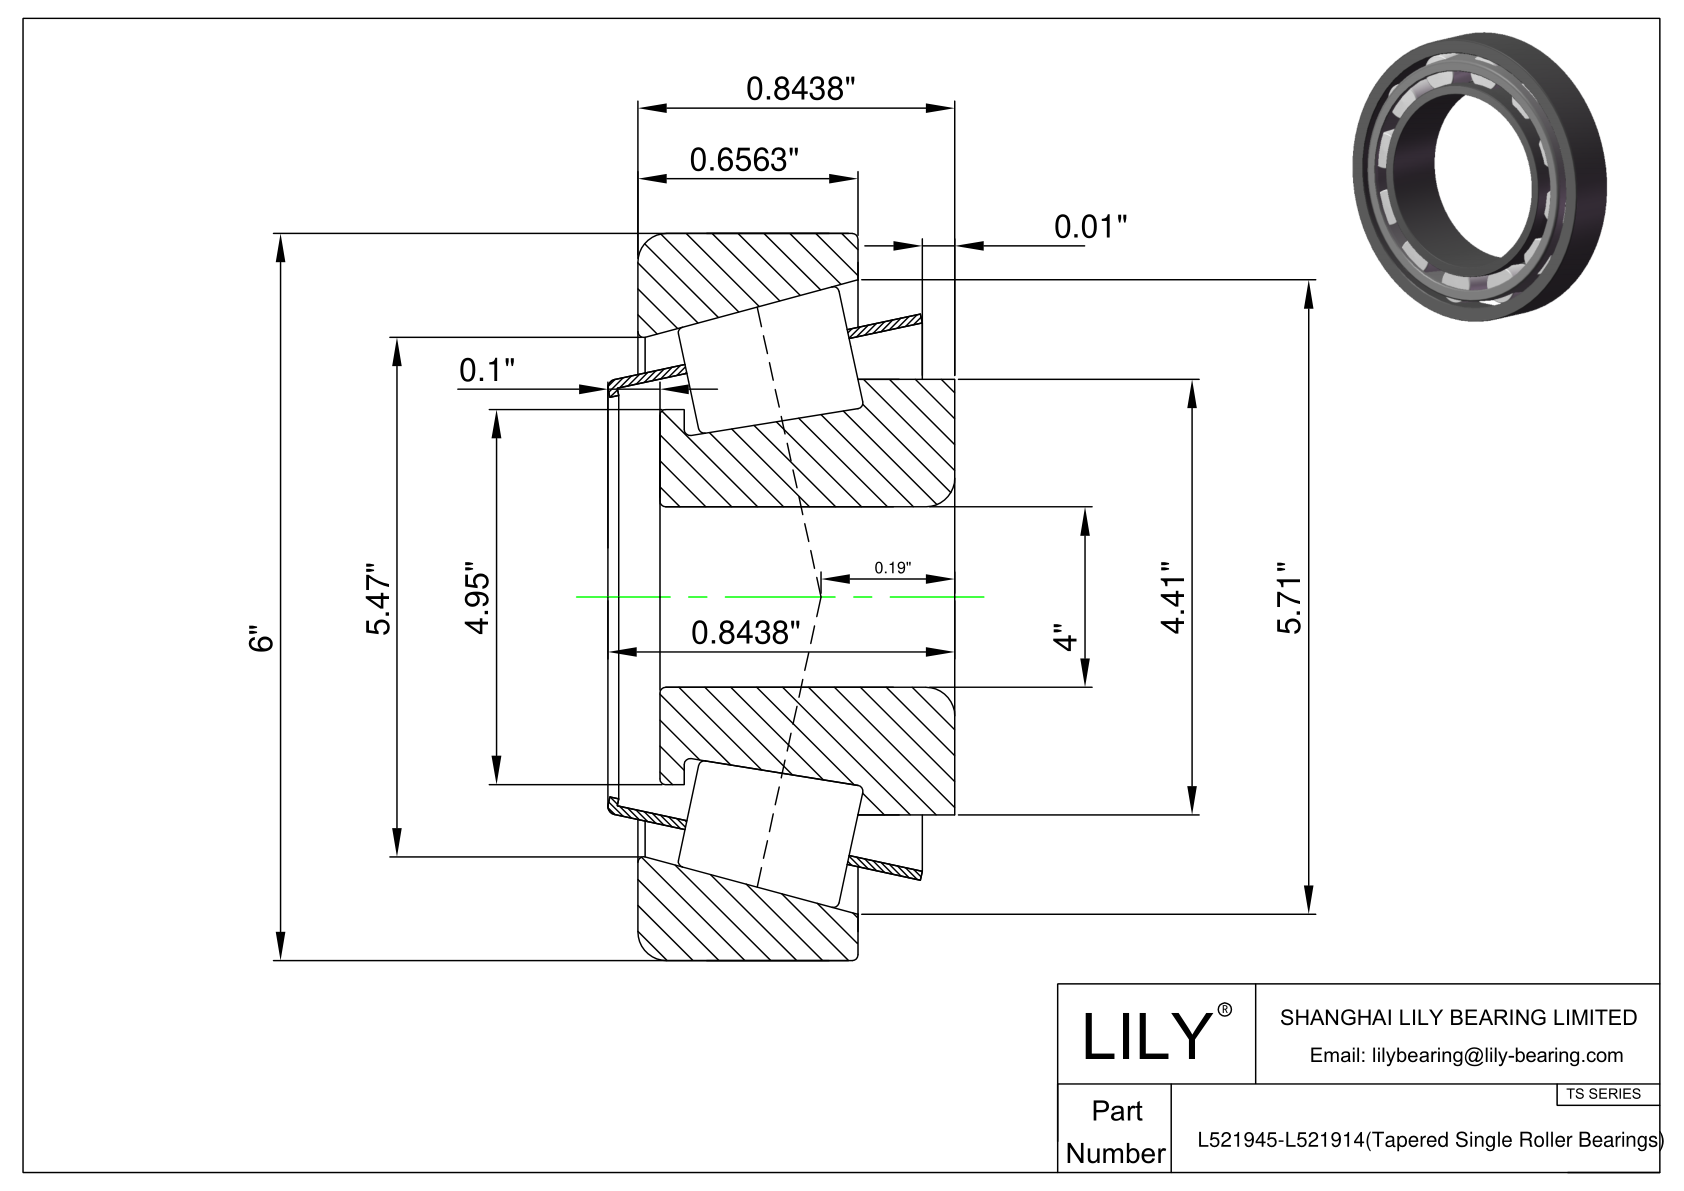 L521945-L521914 TS系列(圆锥单滚子轴承)(英制) CAD图形